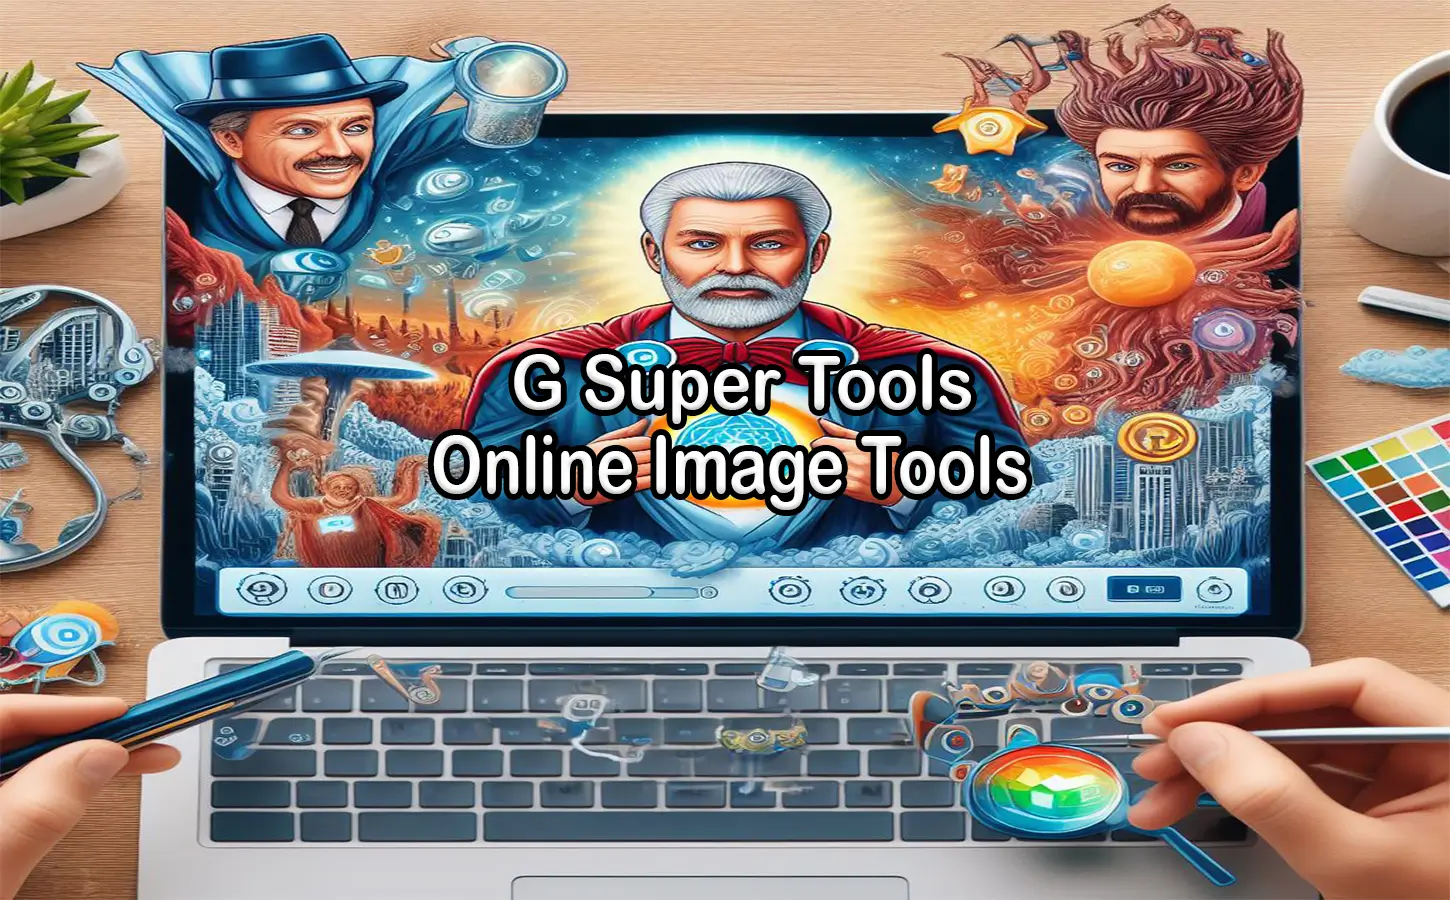 Free Image Tools: Convert, Resize & Make Memes | G Super Tools